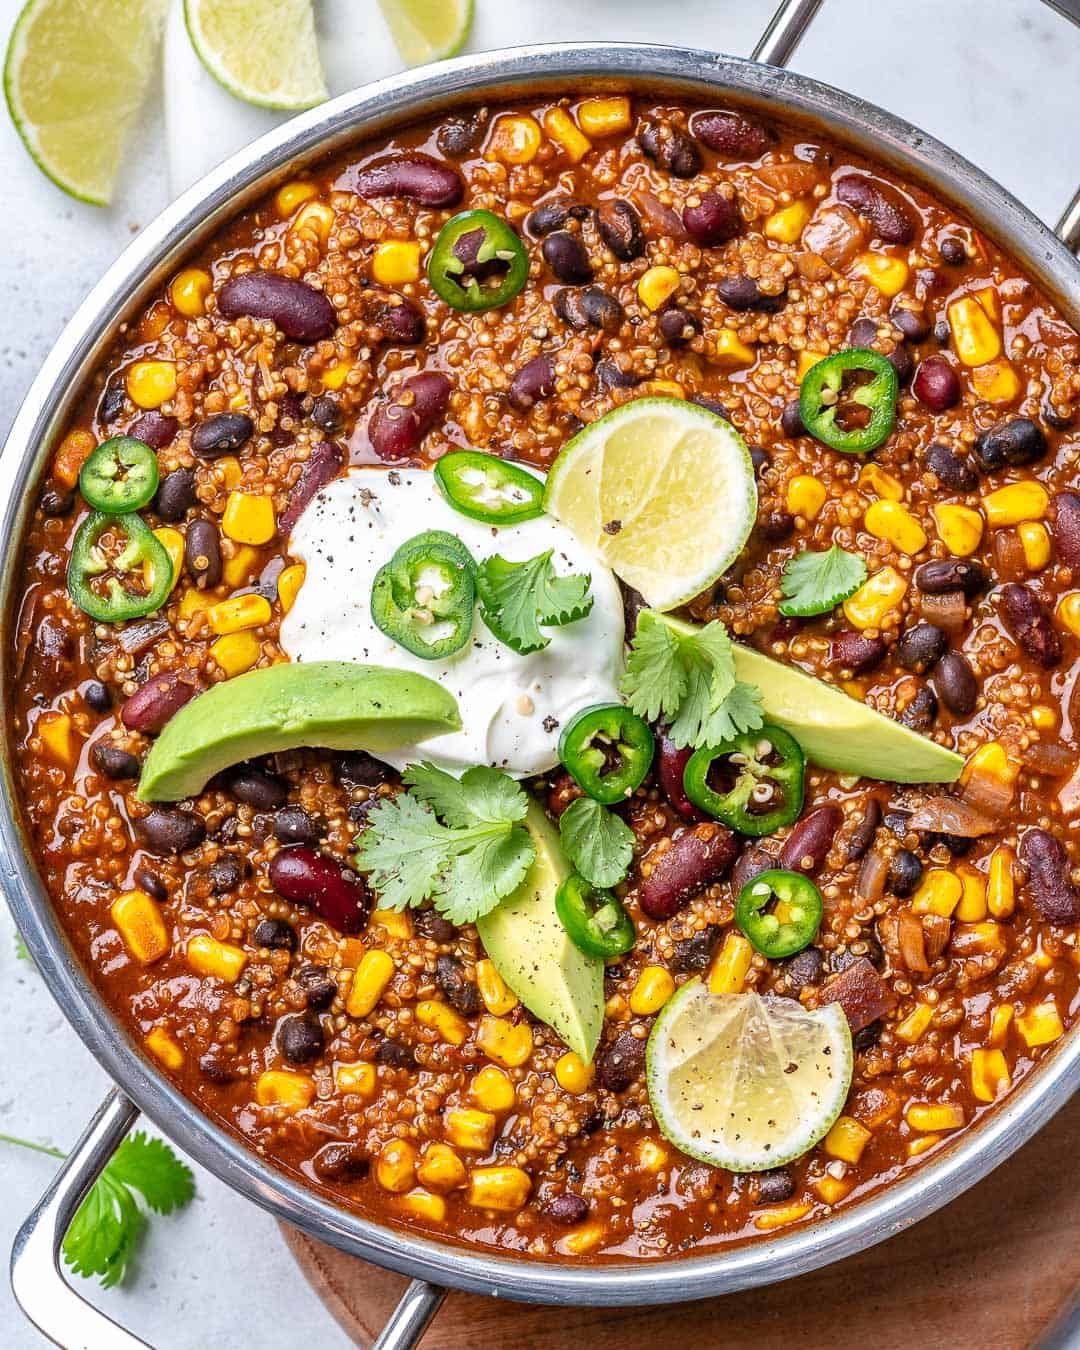 vegetarian chili with beans, quinoa, corn and chili flavors